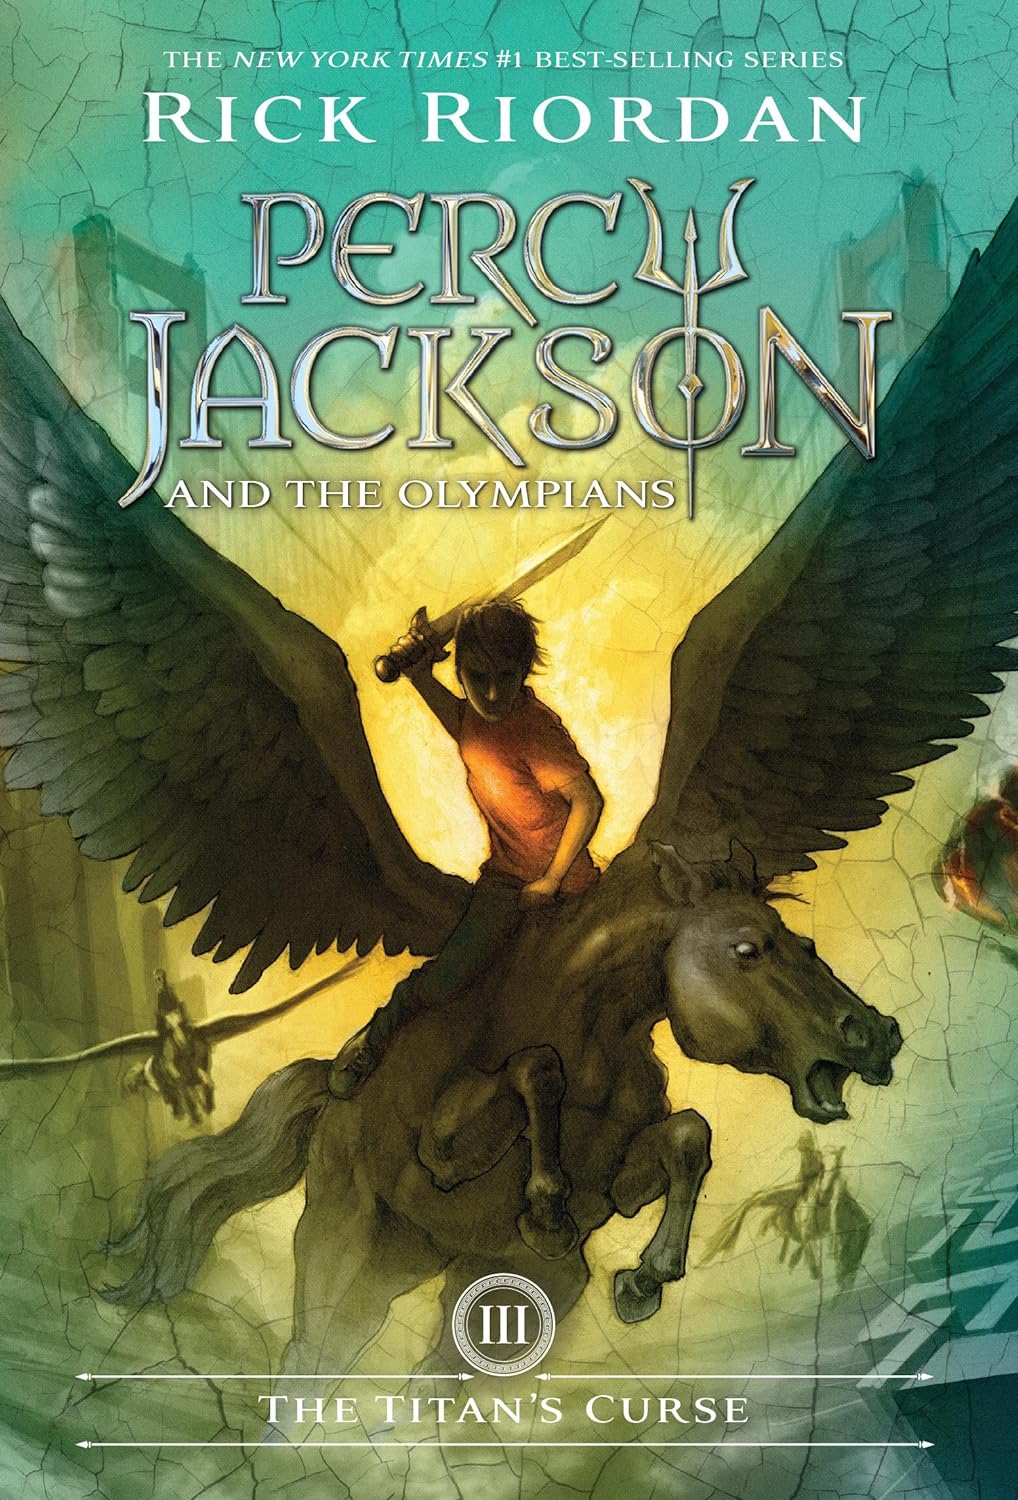 Percy Jackson riding a pegasus